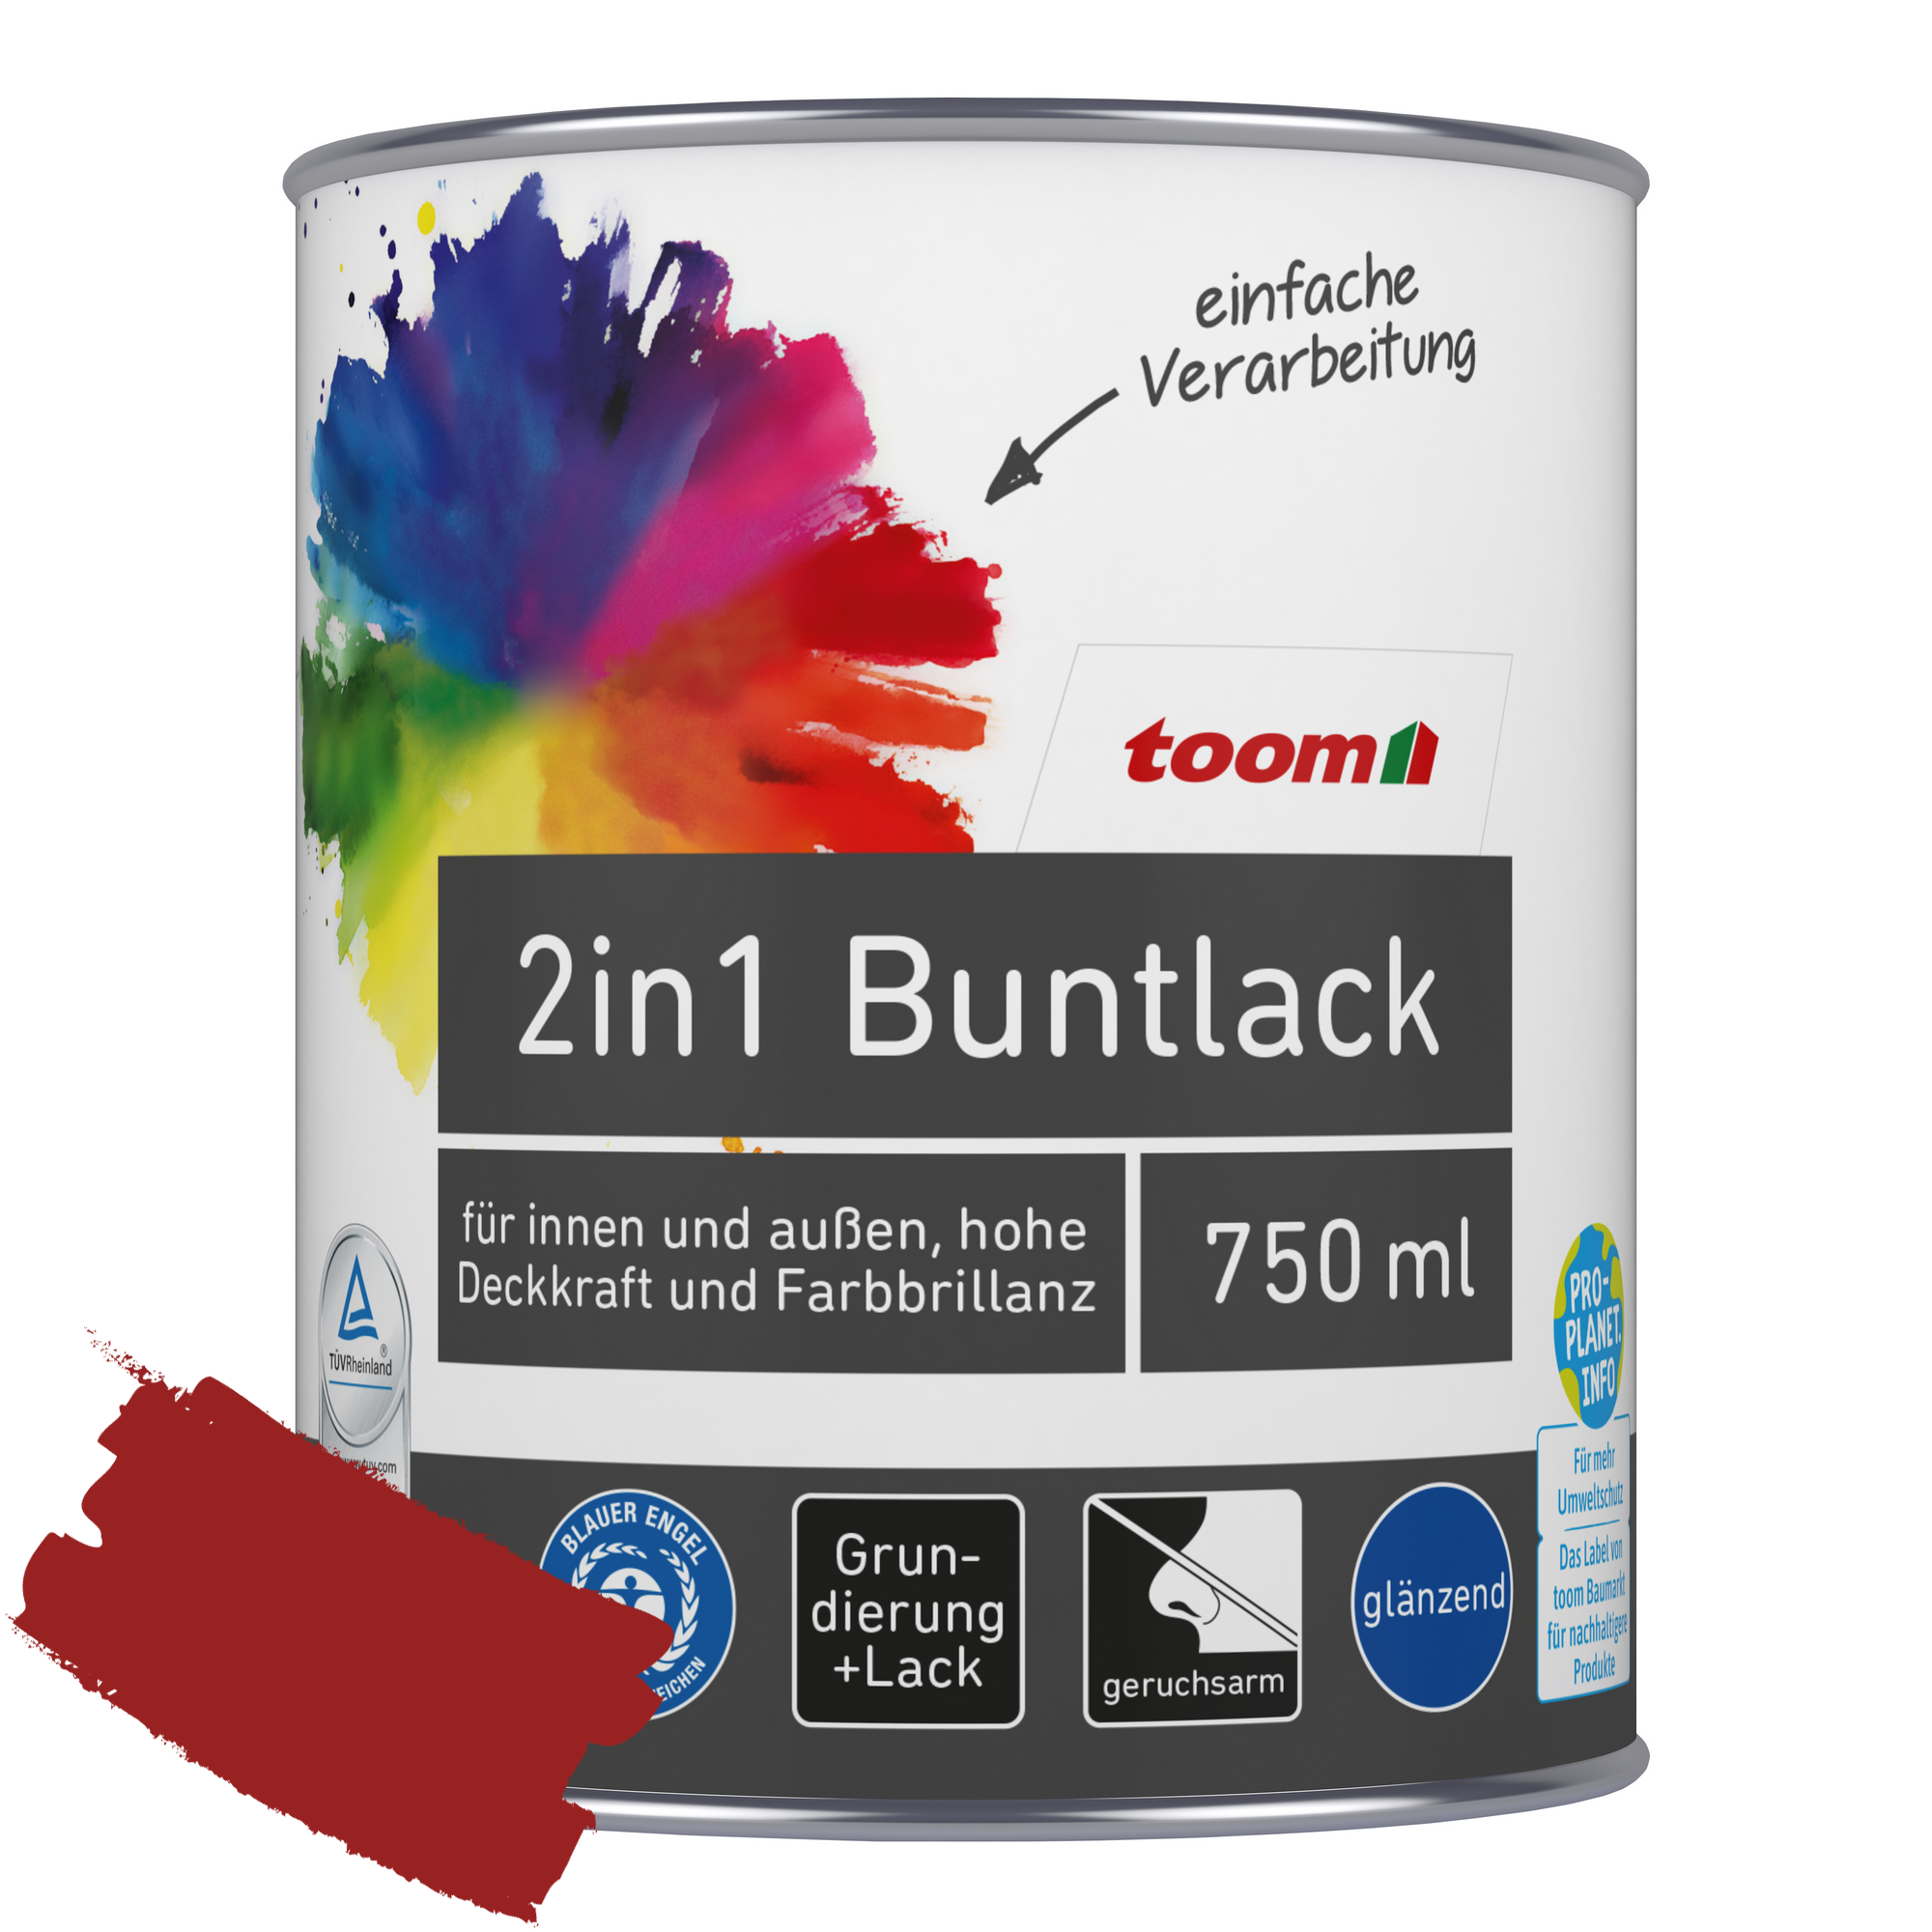 2in1 Buntlack 'Mohnblume' feuerrot glänzend 750 ml + product picture